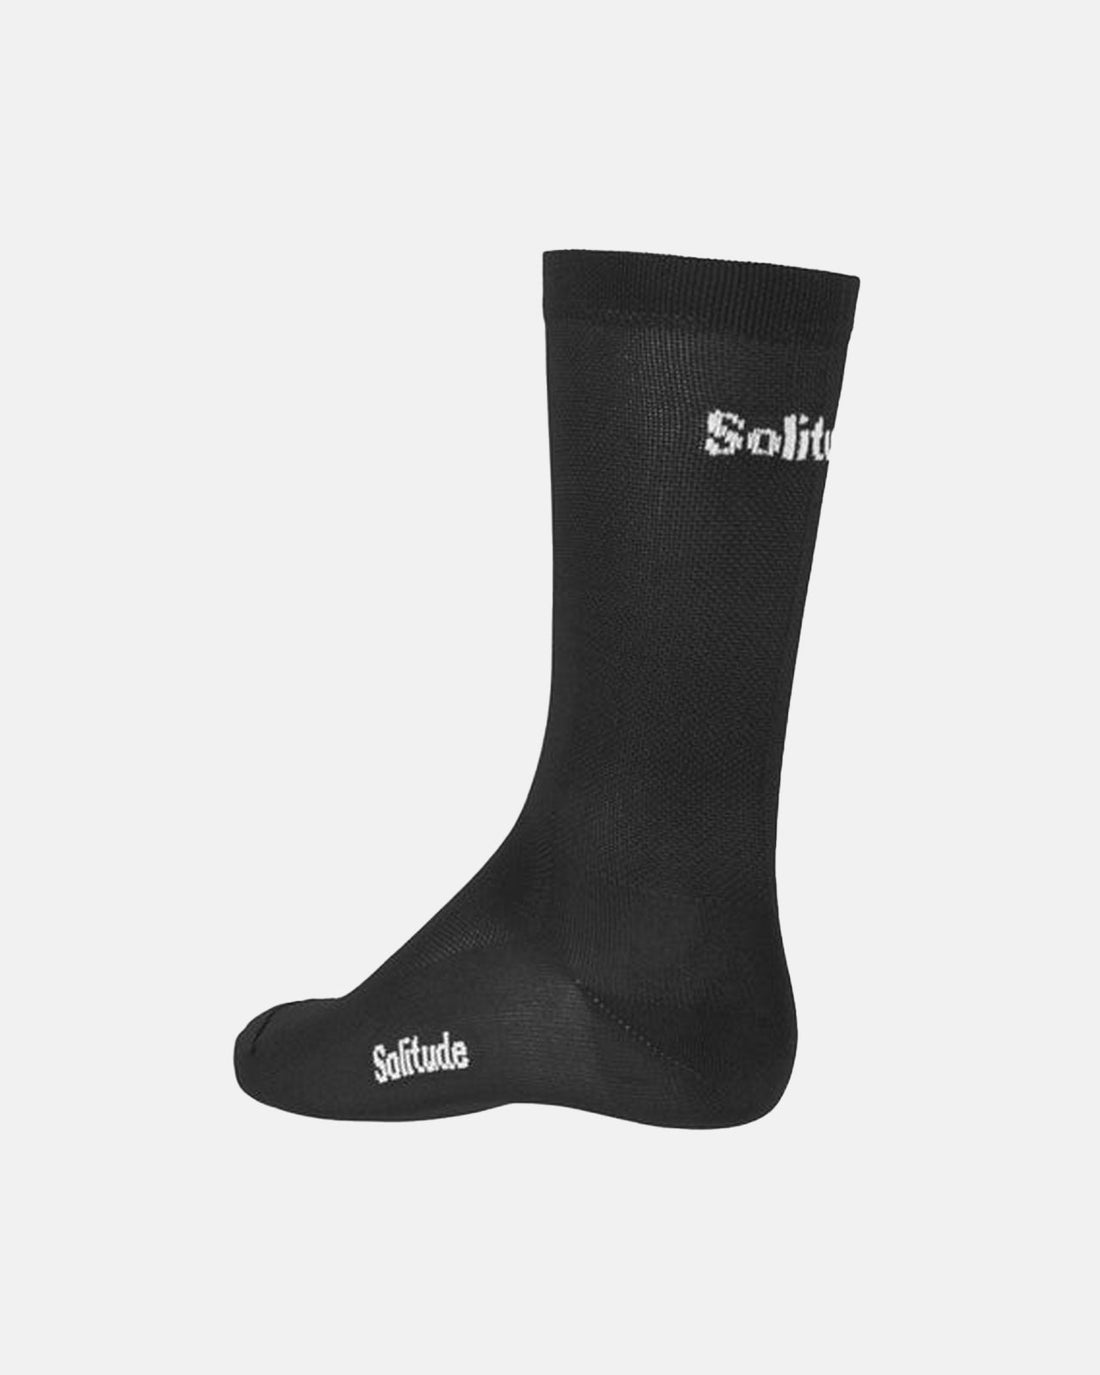 Solitude Socks - Black - Pas Normal Studios